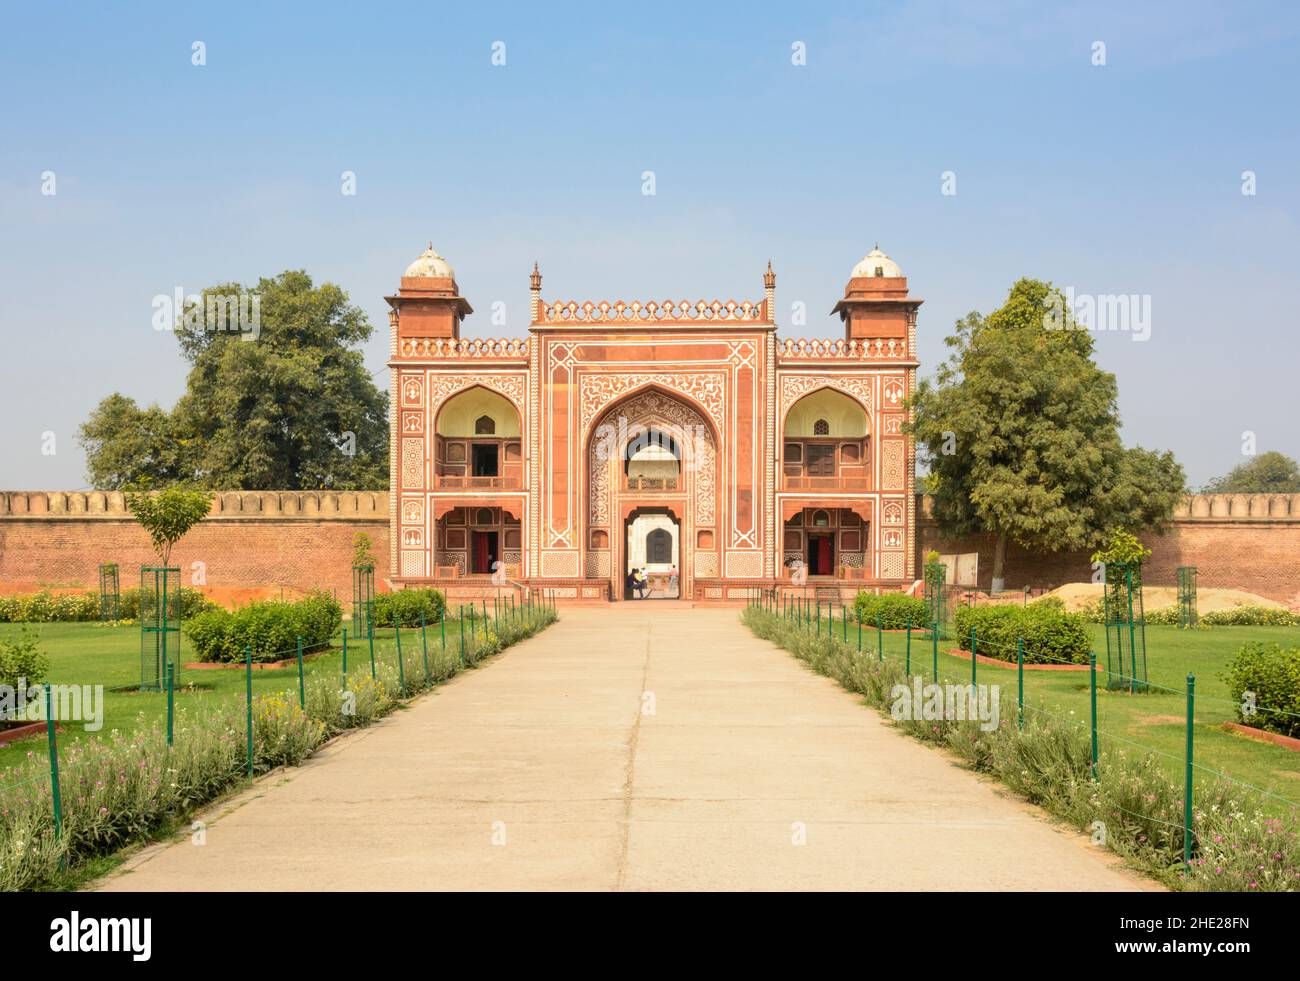 Entrance gate to the Tomb of Itmad-Ud-Daulah or Etimad-ud-Daulah, Agra, Uttar Pradesh, India. Also known as the Baby Taj or Mini Taj. Stock Photo